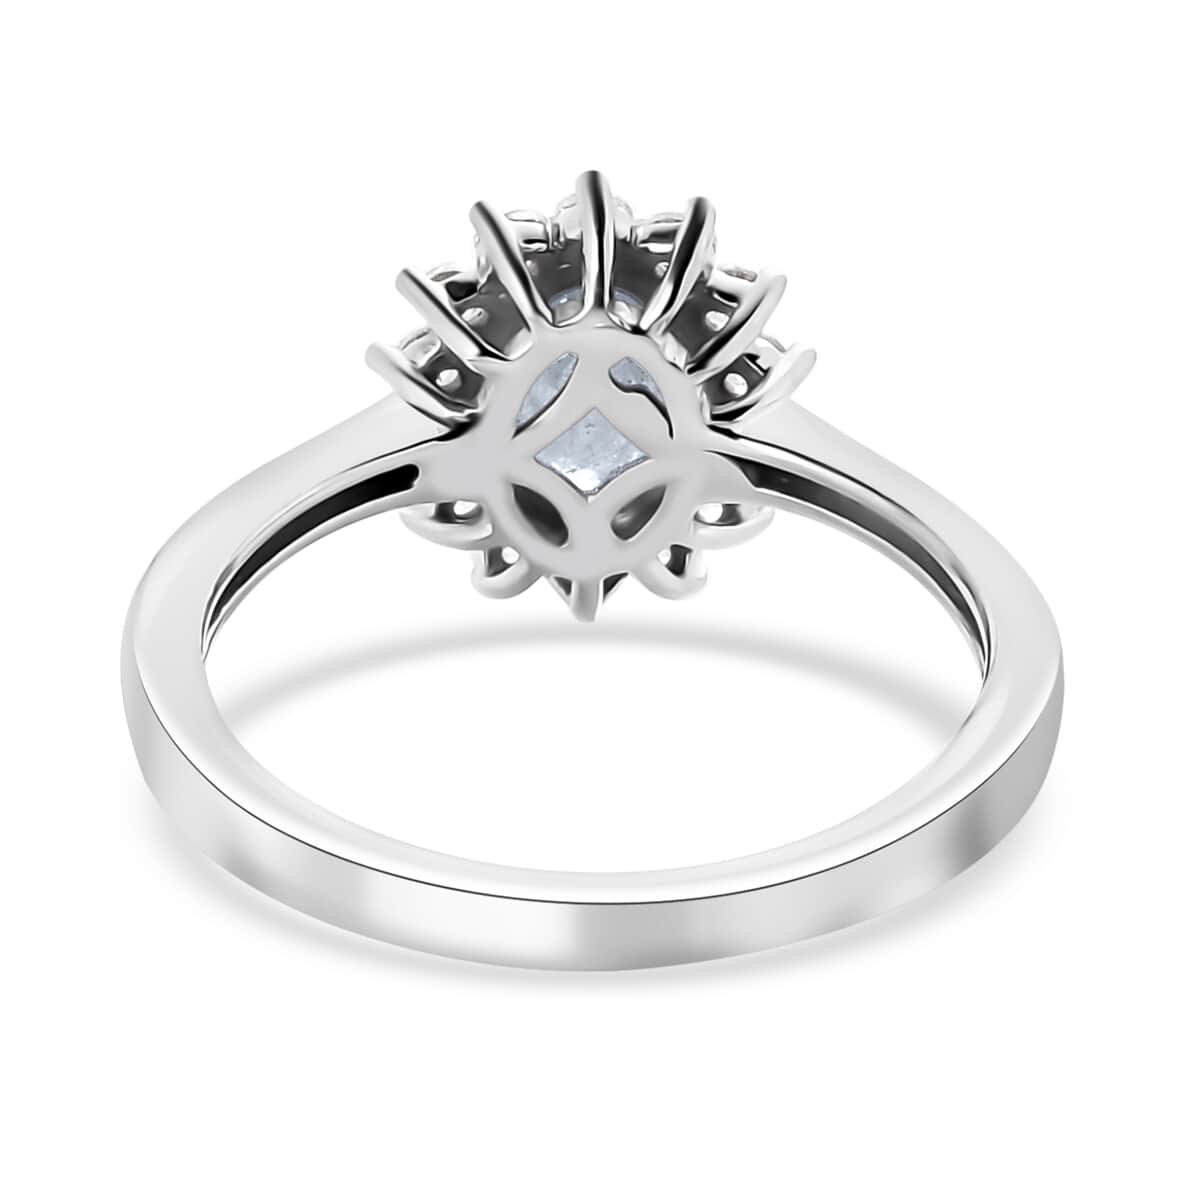 Mangoro Aquamarine and White Zircon Sunburst Ring in Platinum Over Sterling Silver (Size 9.0) 1.25 ctw image number 4